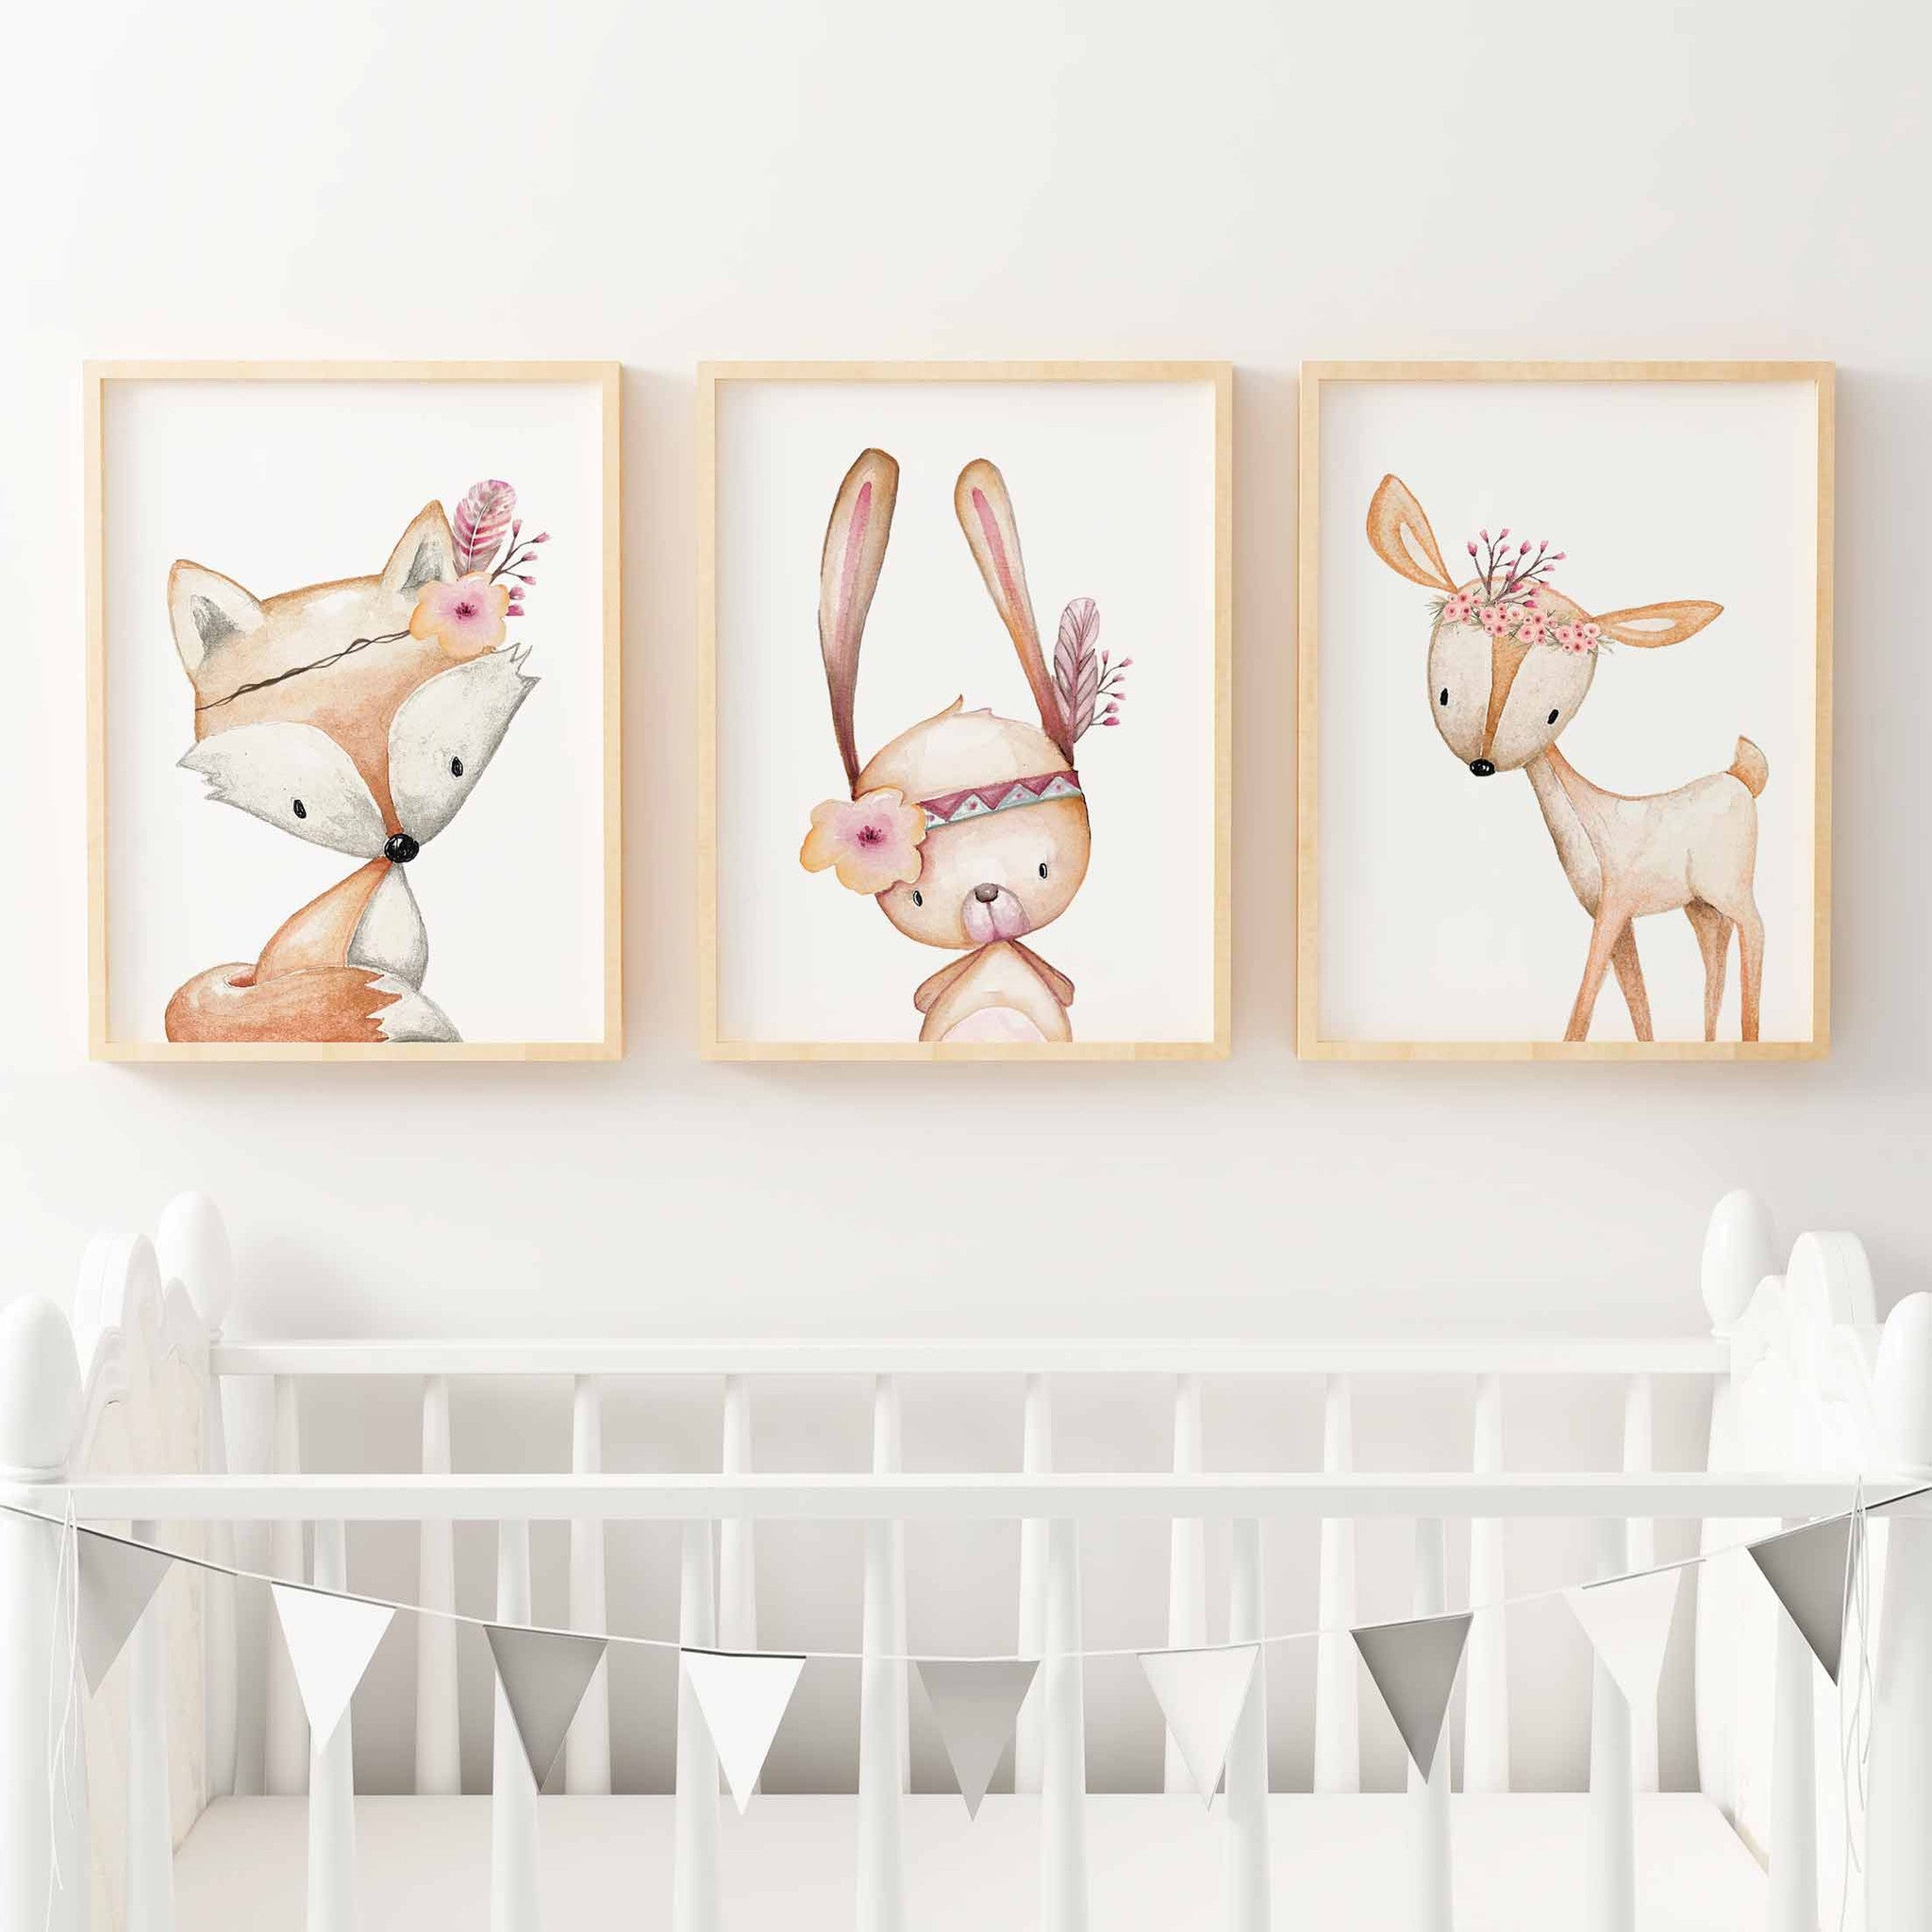 Baby Girls Nursery Prints | Bedroom Wall Art Decor online ...